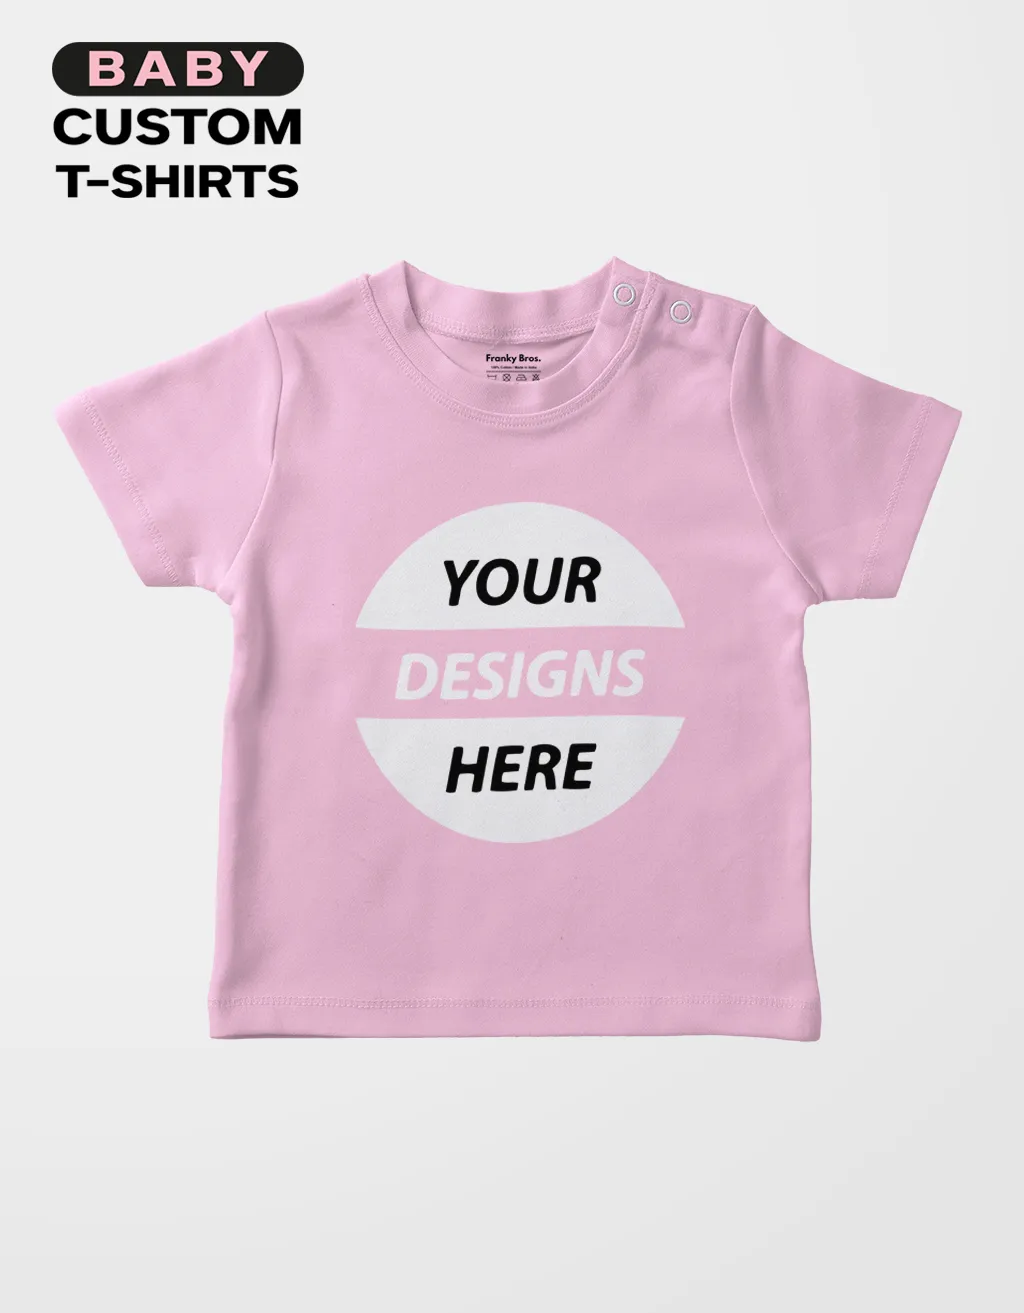 customized t shirt for baby boy and girl newborn t shirt photo printing in mumbai online